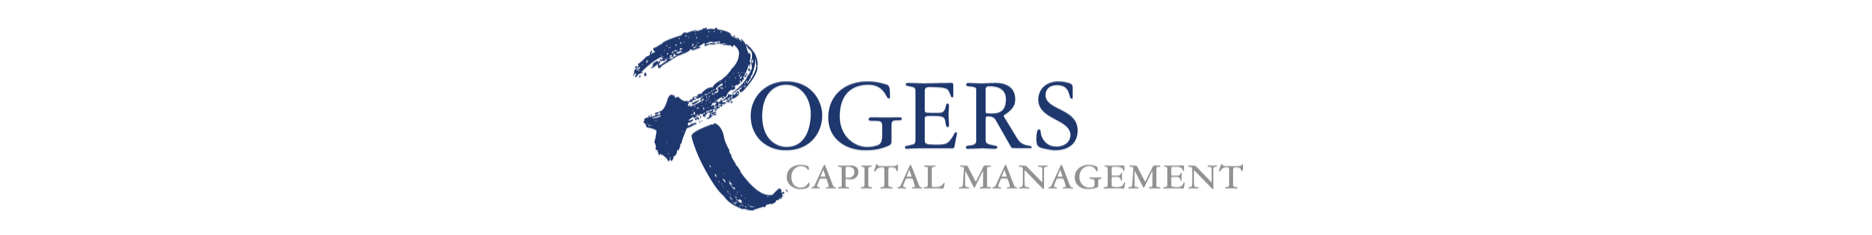 Rogers Capital Management 